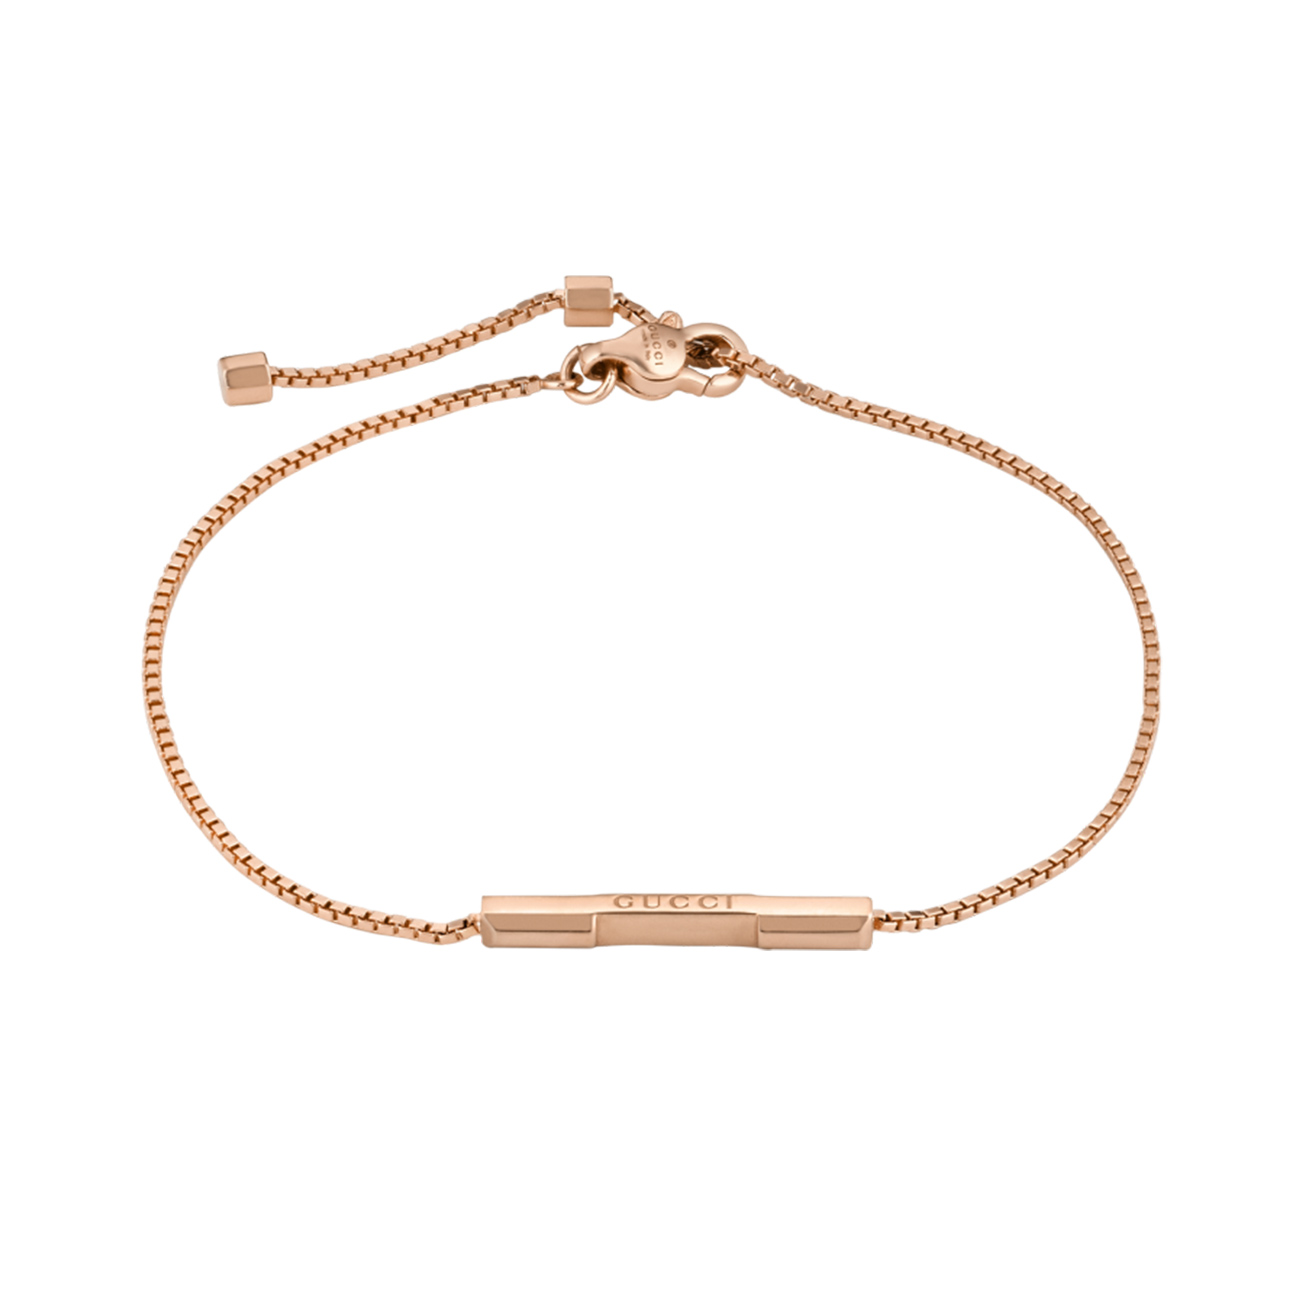 Gucci Link to Love Bracelet in 18k Pink Gold